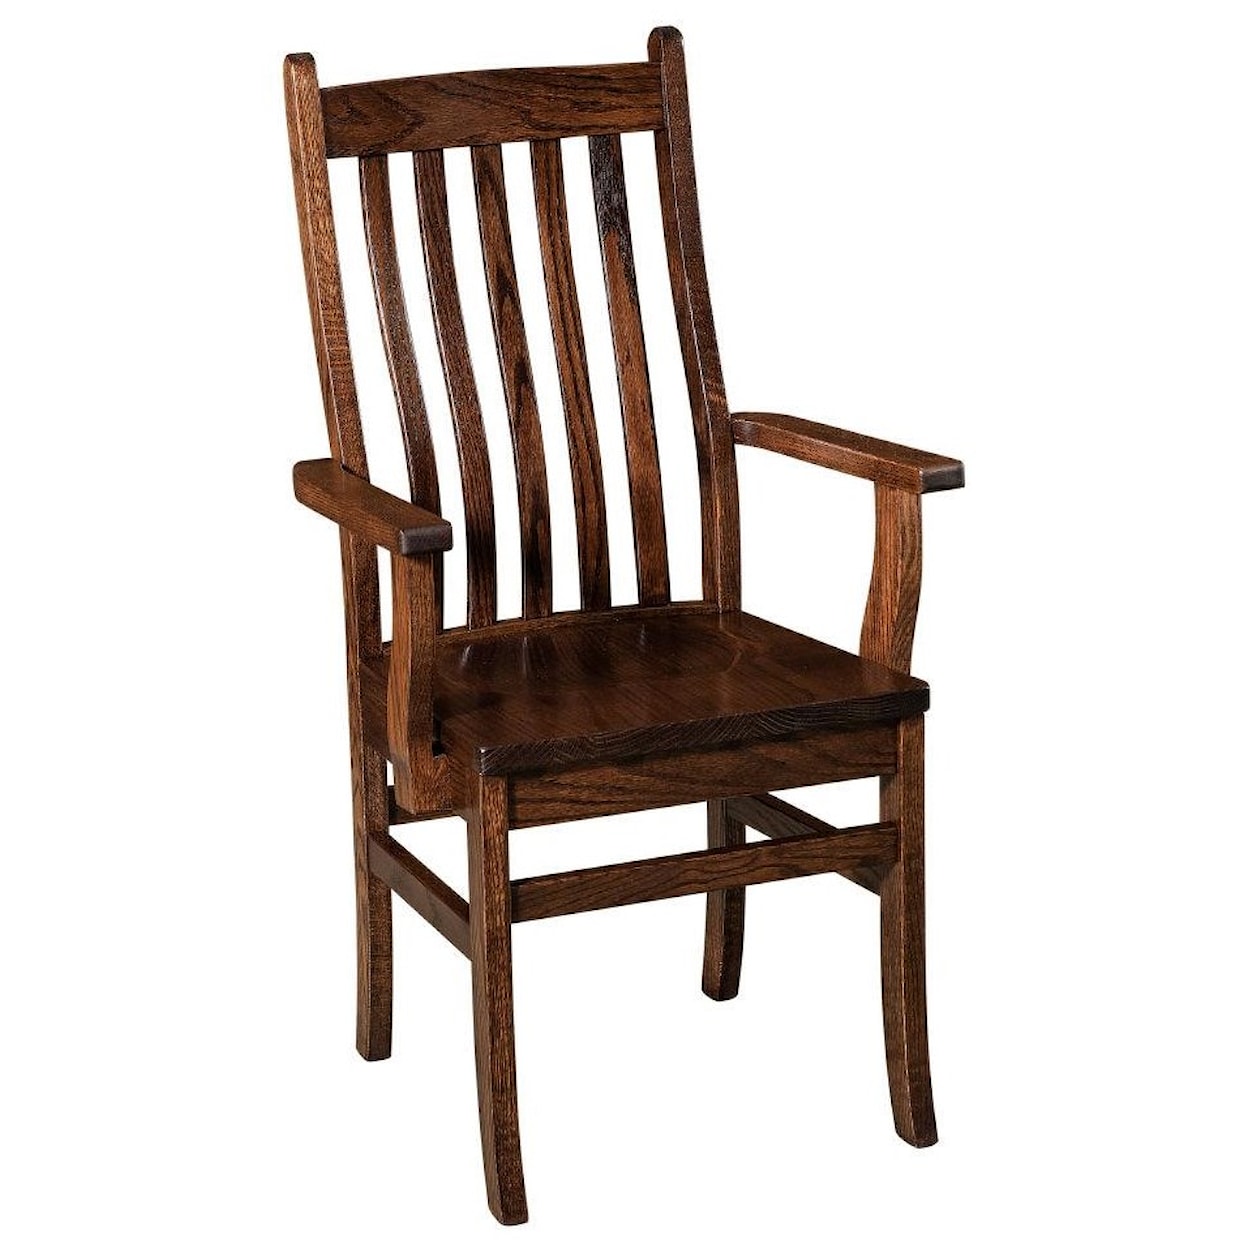 F&N Woodworking Abe Arm Chair